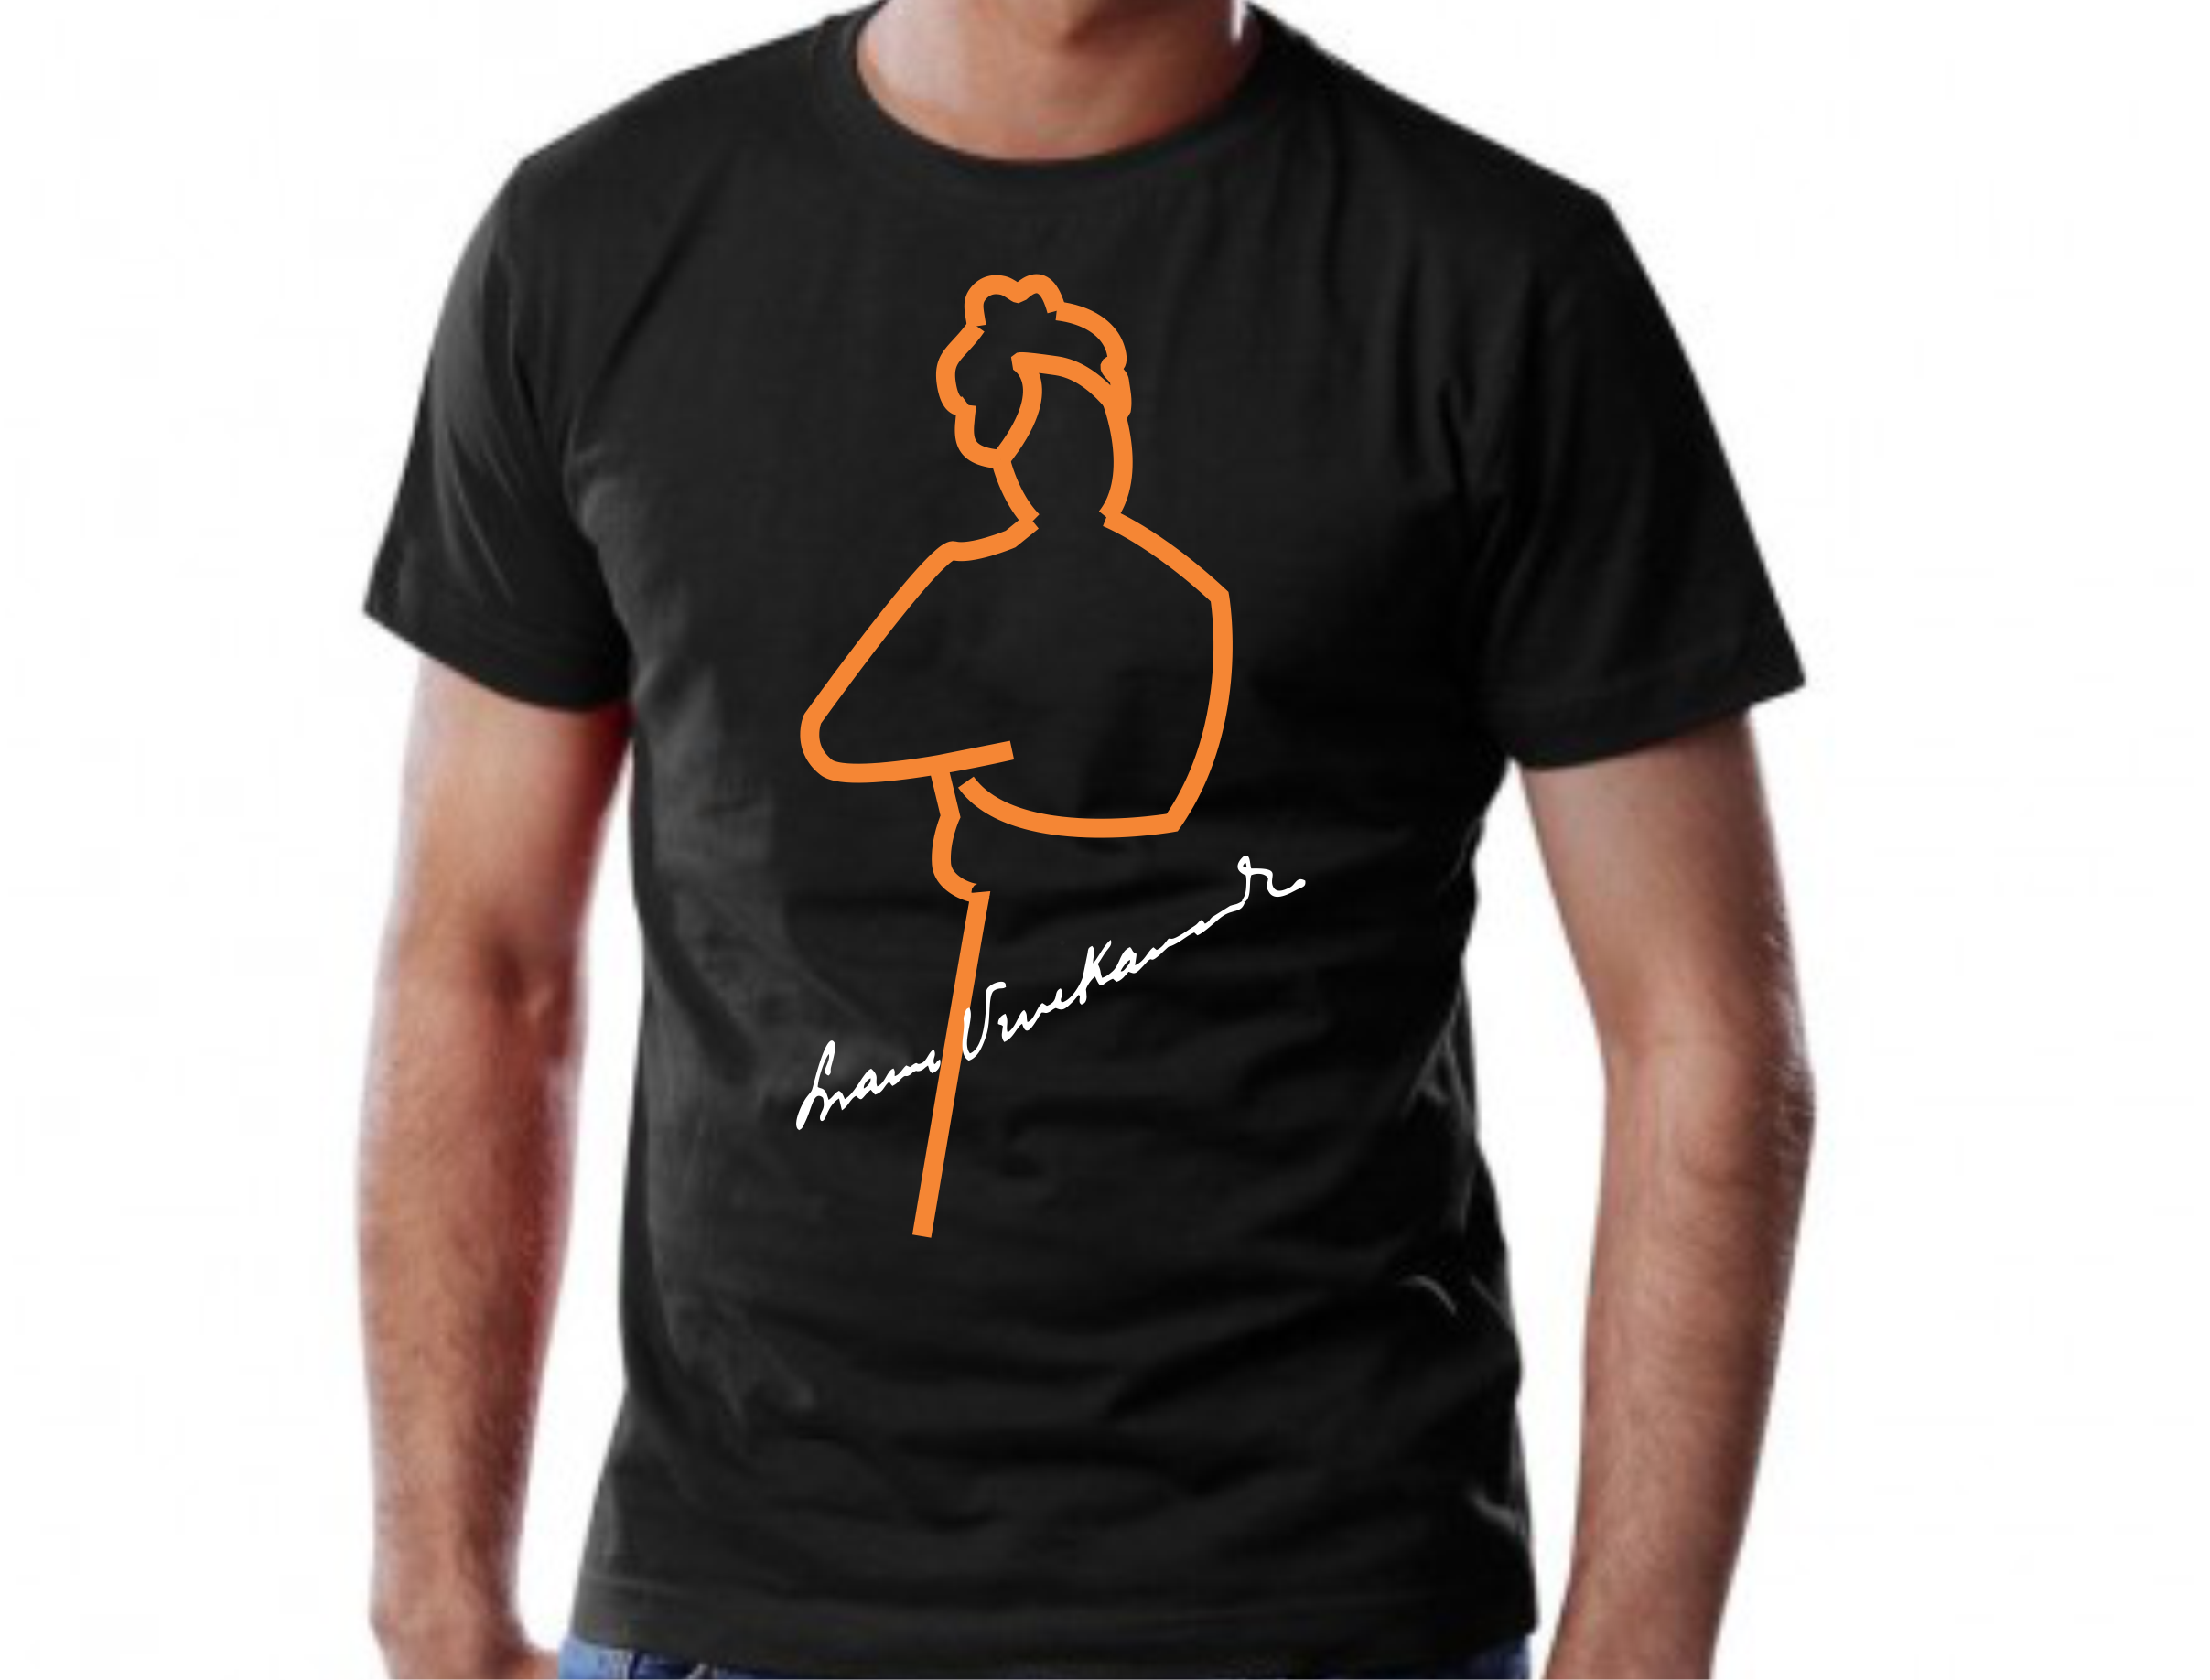 Special T-shirt with Vivekananda Images/Quotes; a Bangalore Swayamsevak Initiative